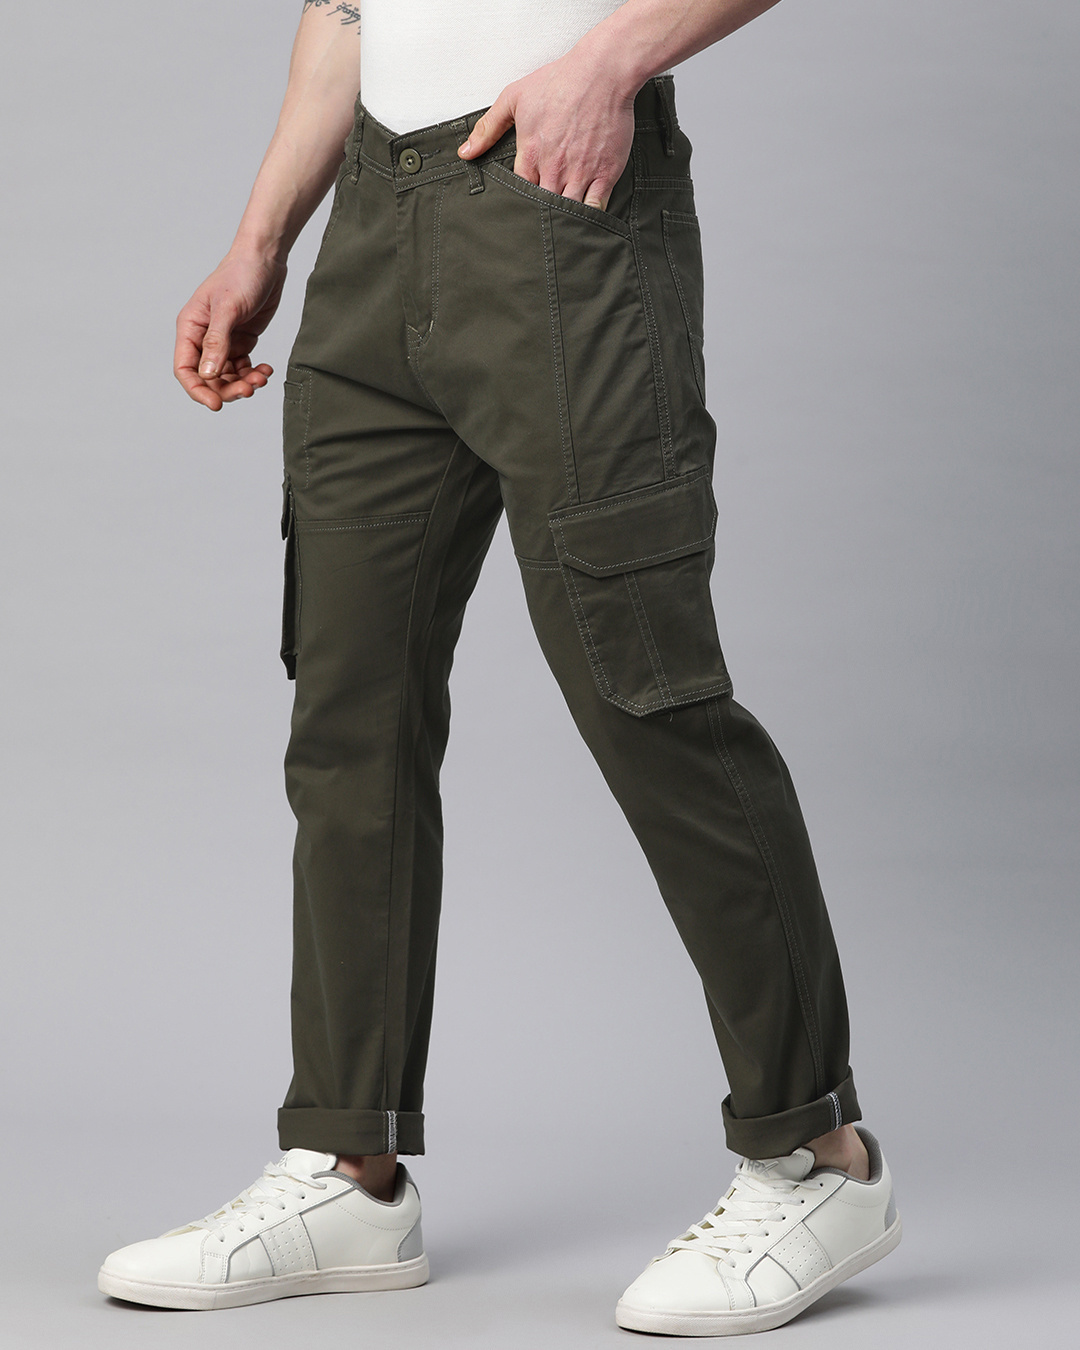 Buy Men's Olive Green Slim Fit Cargo Pants Online at Bewakoof